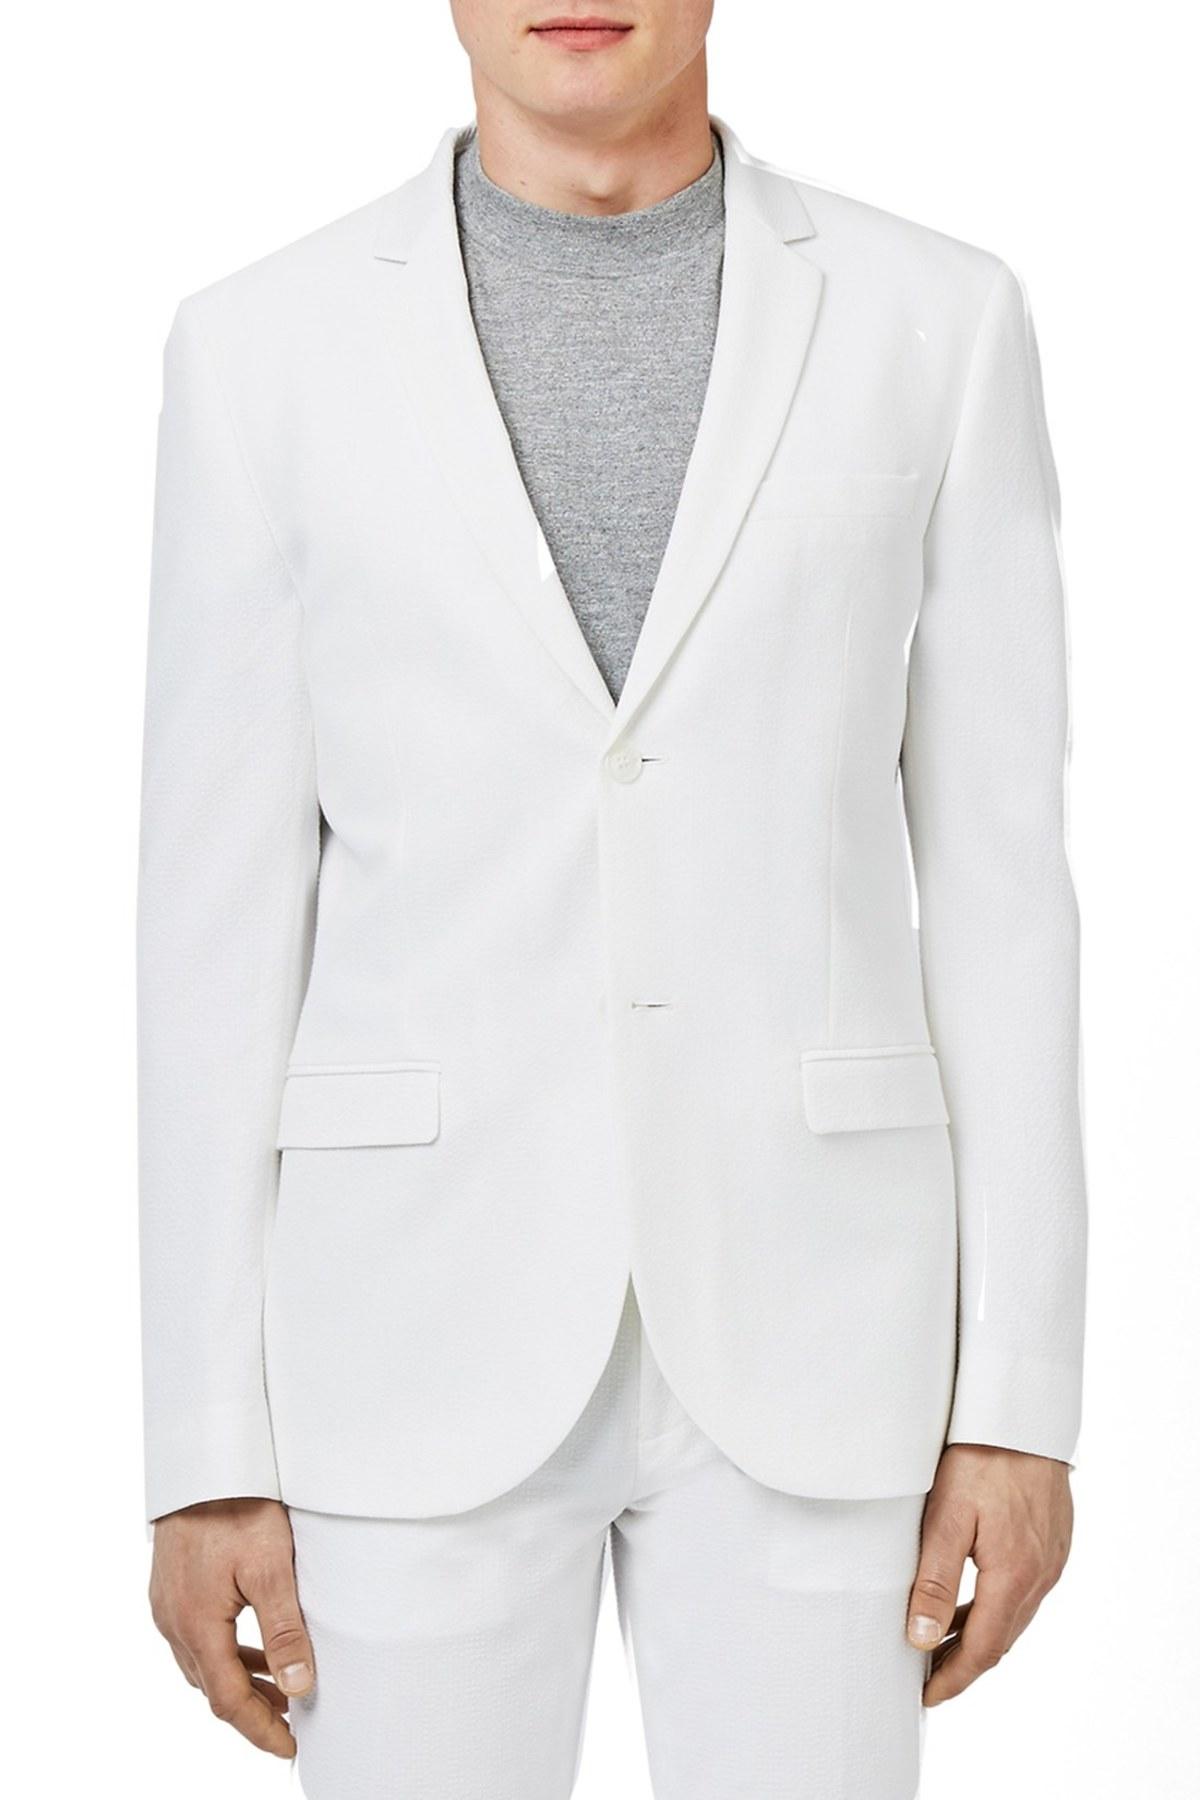 Lyst - TOPMAN Skinny Fit Seersucker Suit Jacket in White for Men